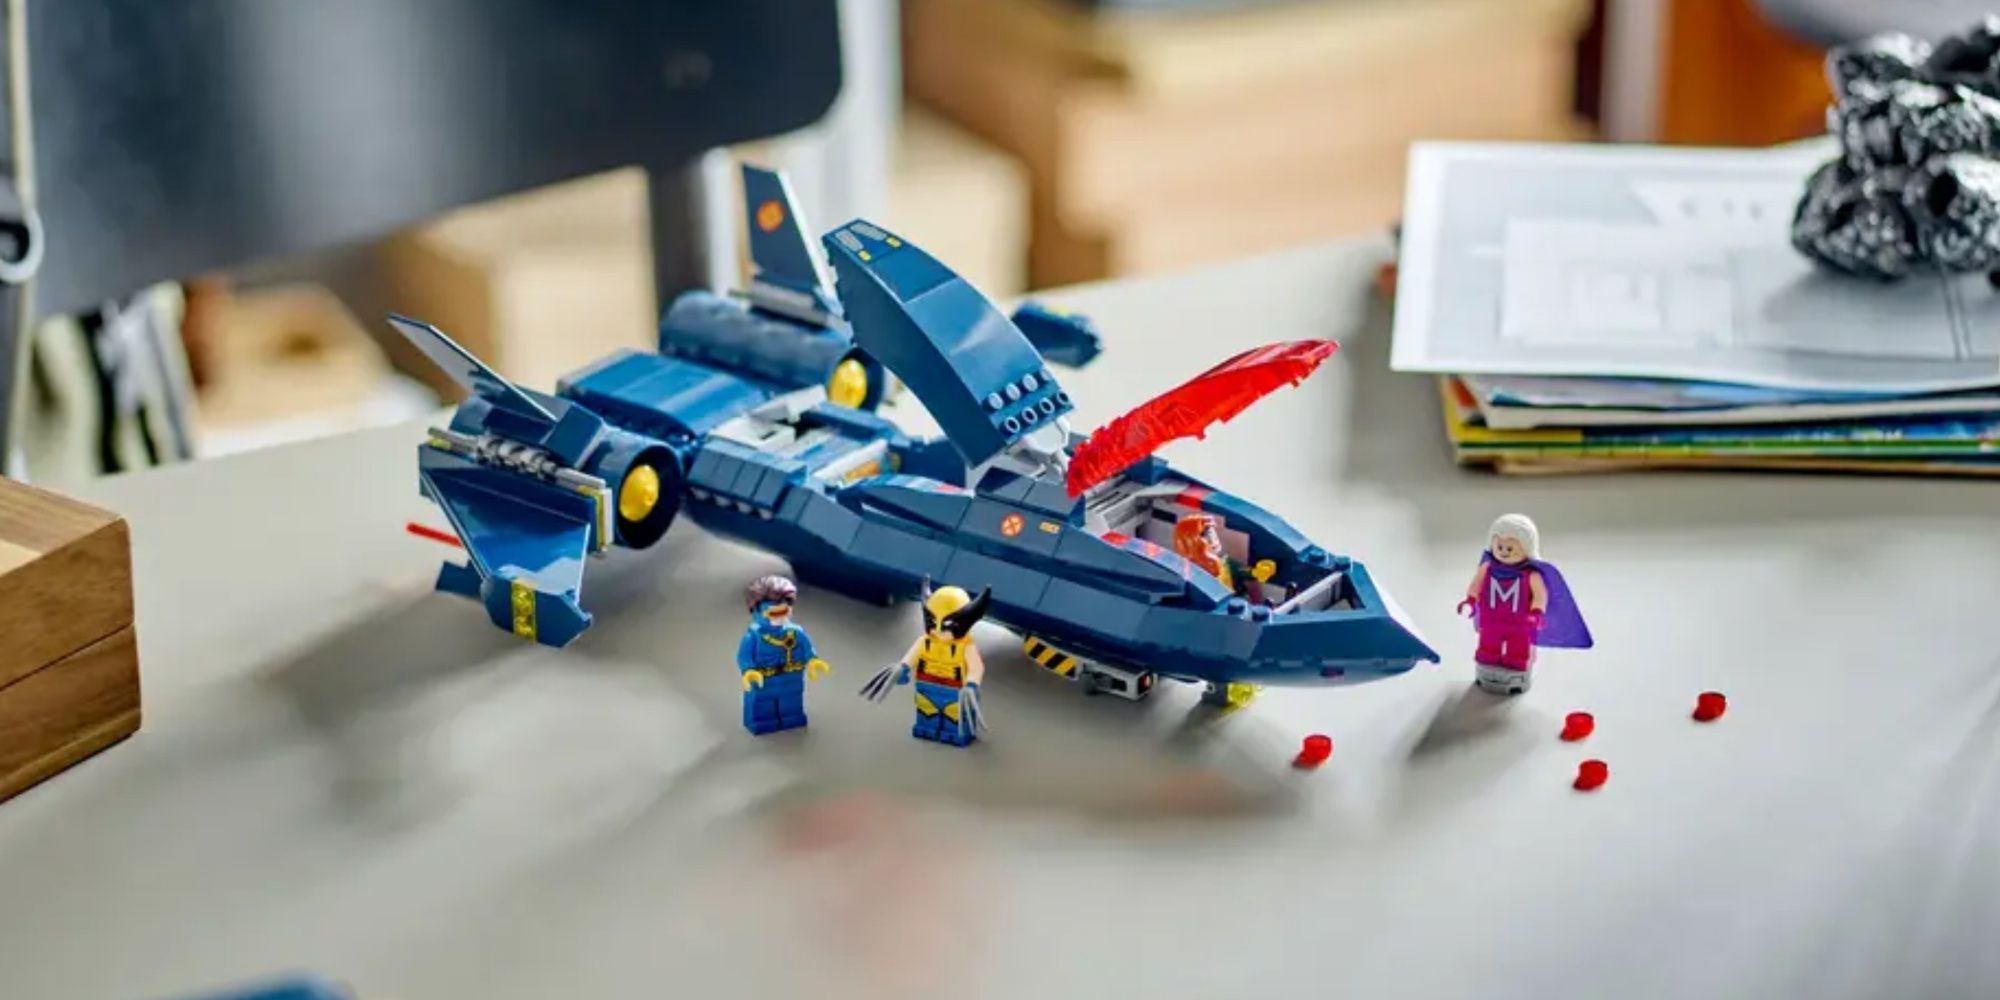 x-men '97 x-jet lego set on a desk with minifigures